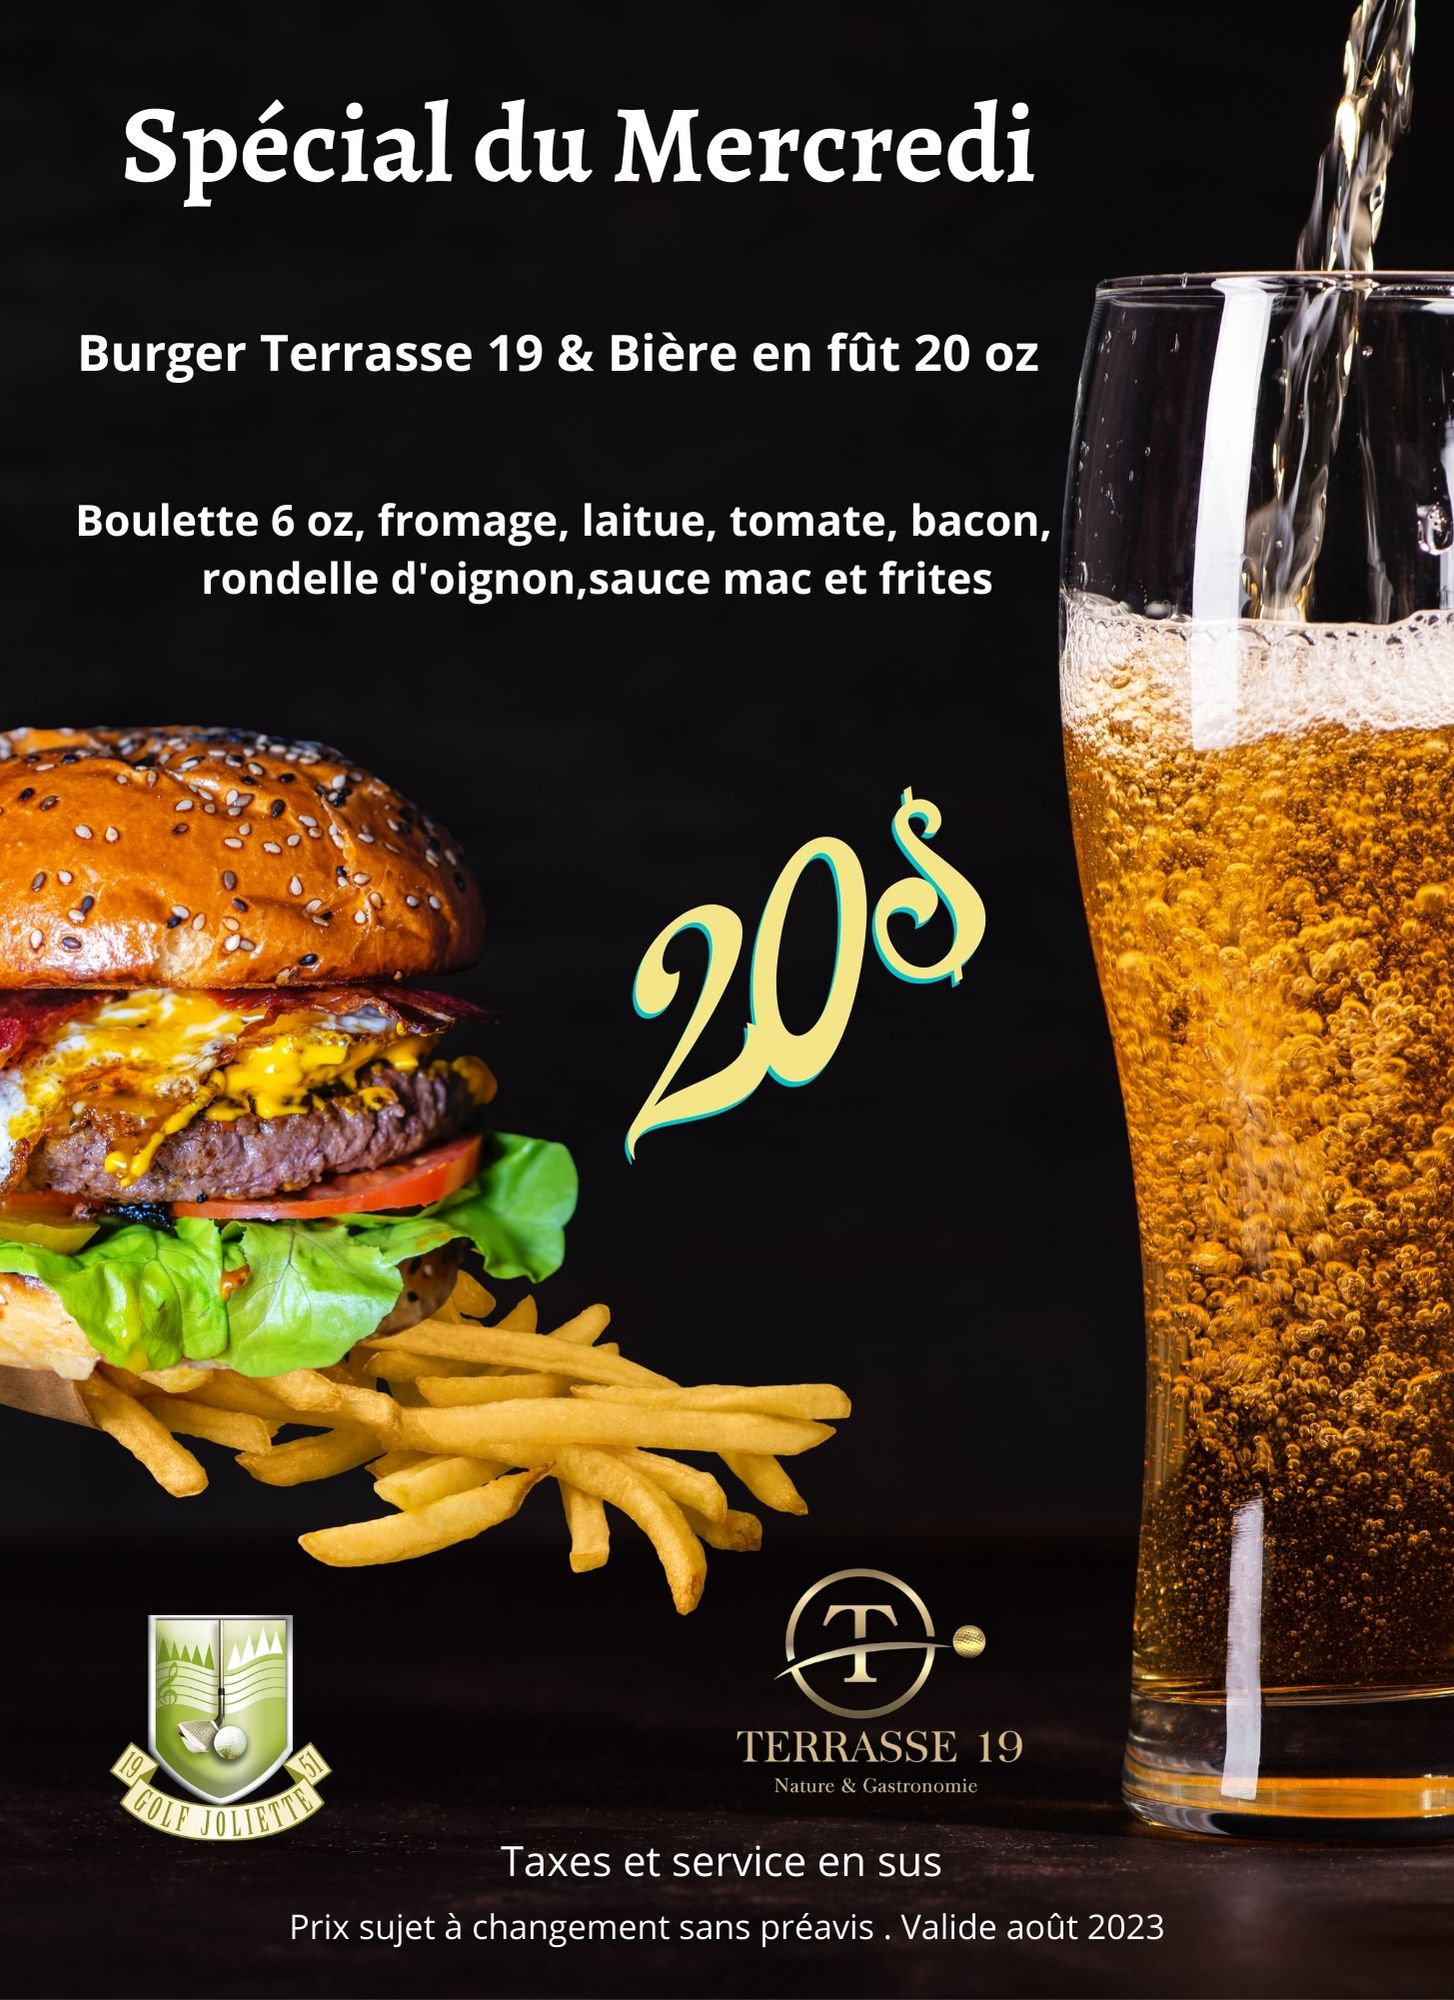 burger terrasse 19 